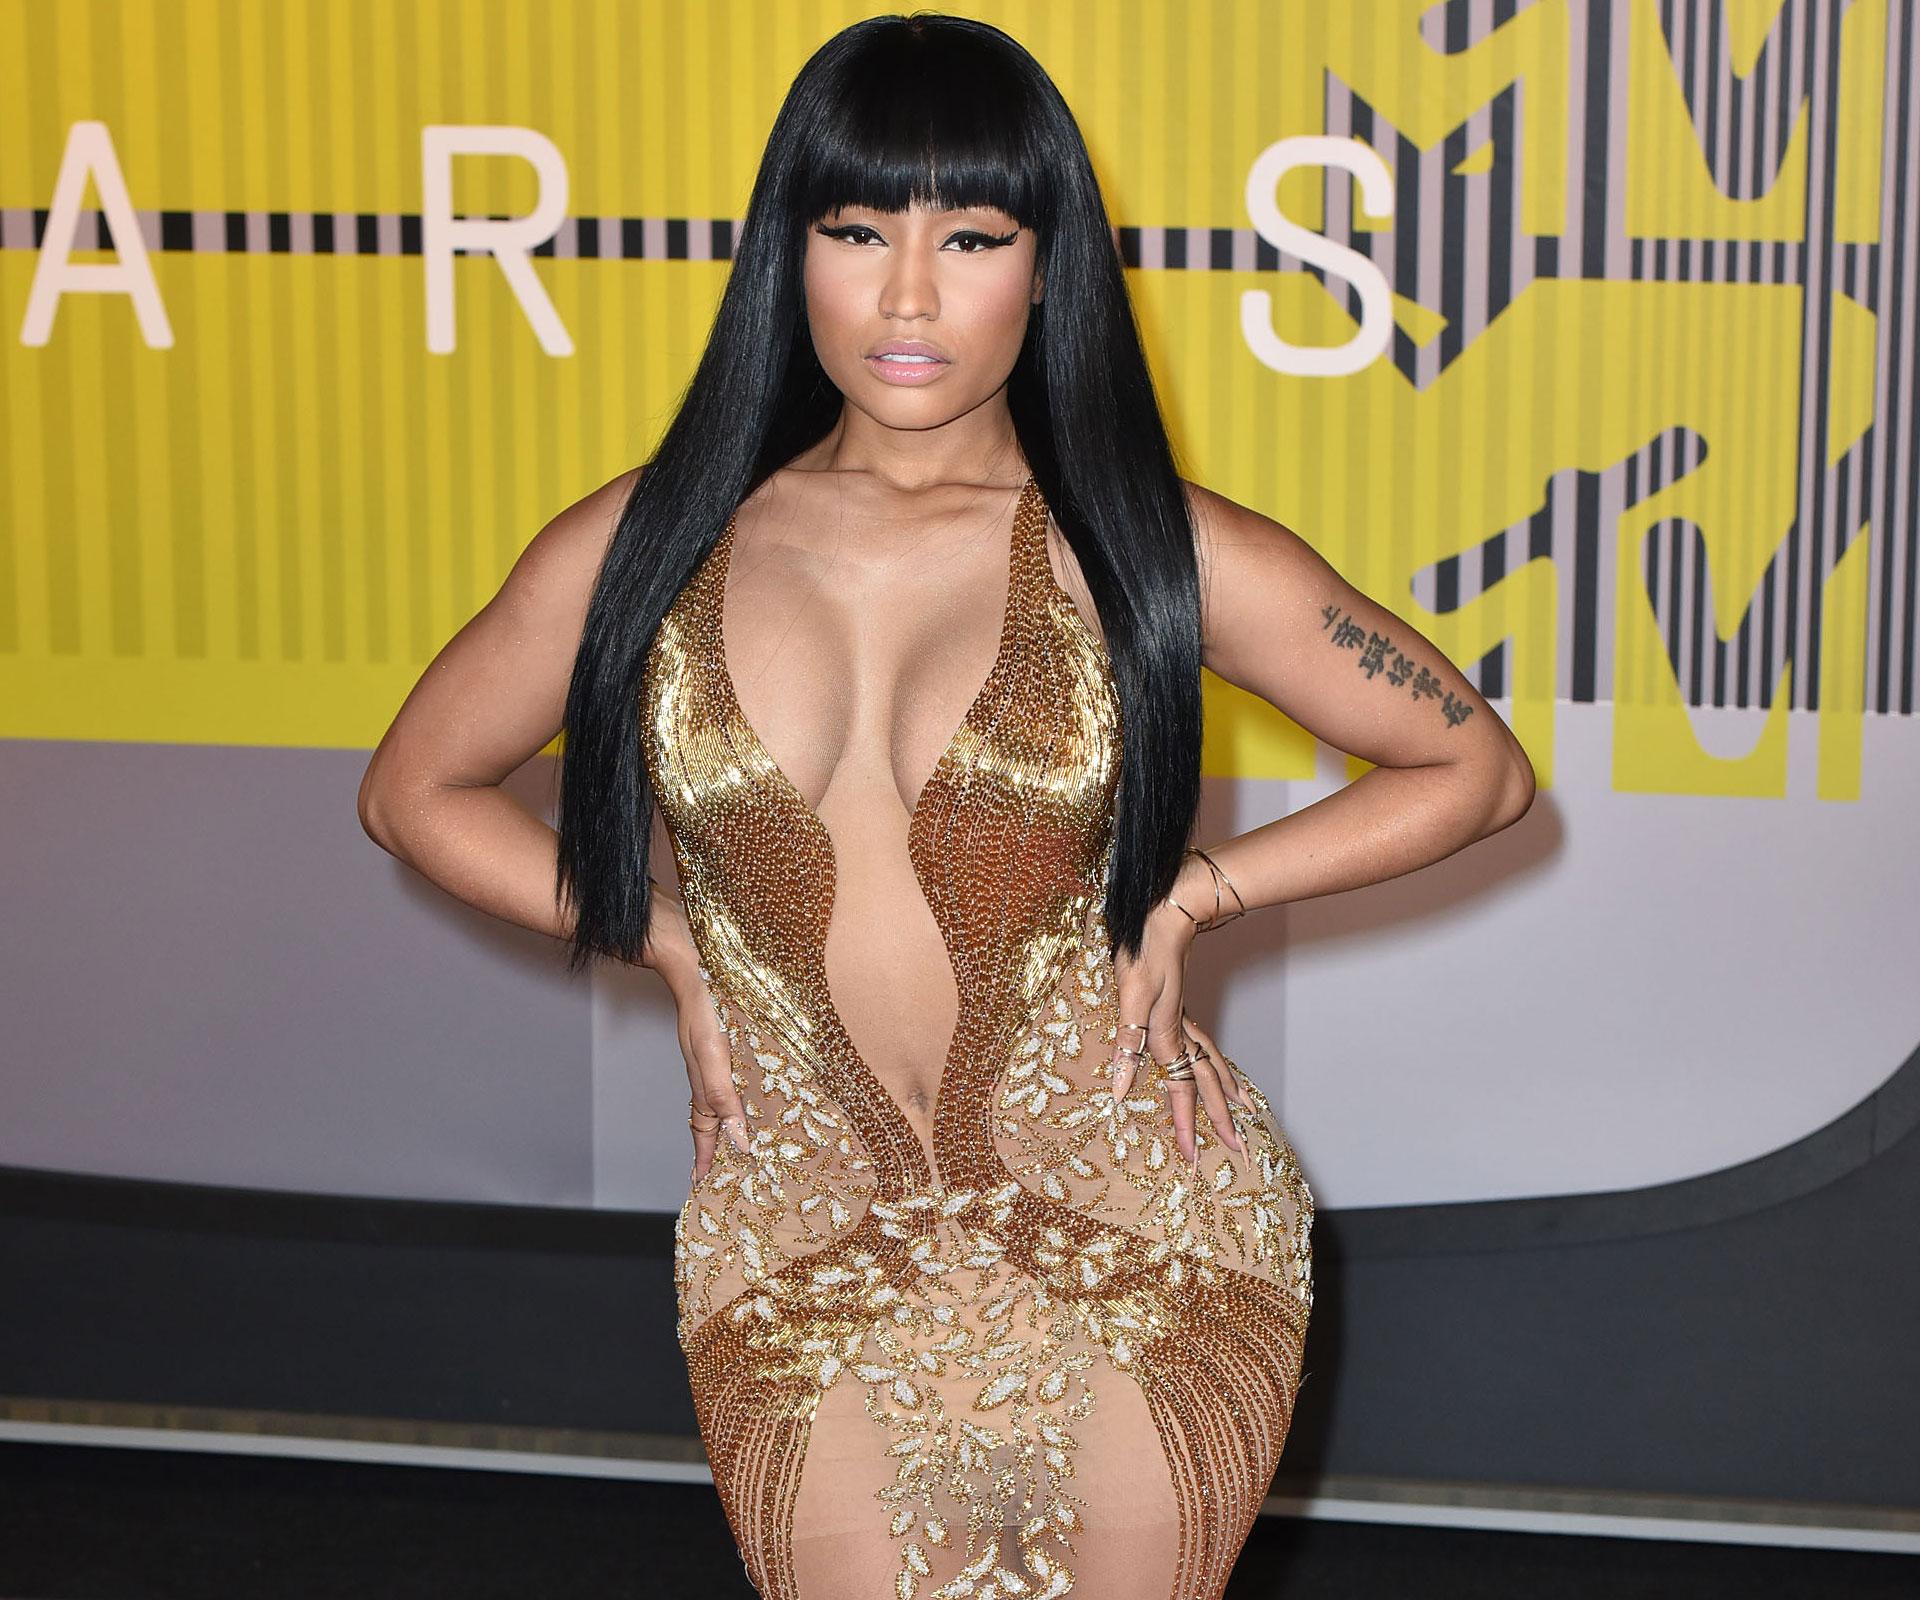 Nicki Minaj at the MTV VMAs 2015